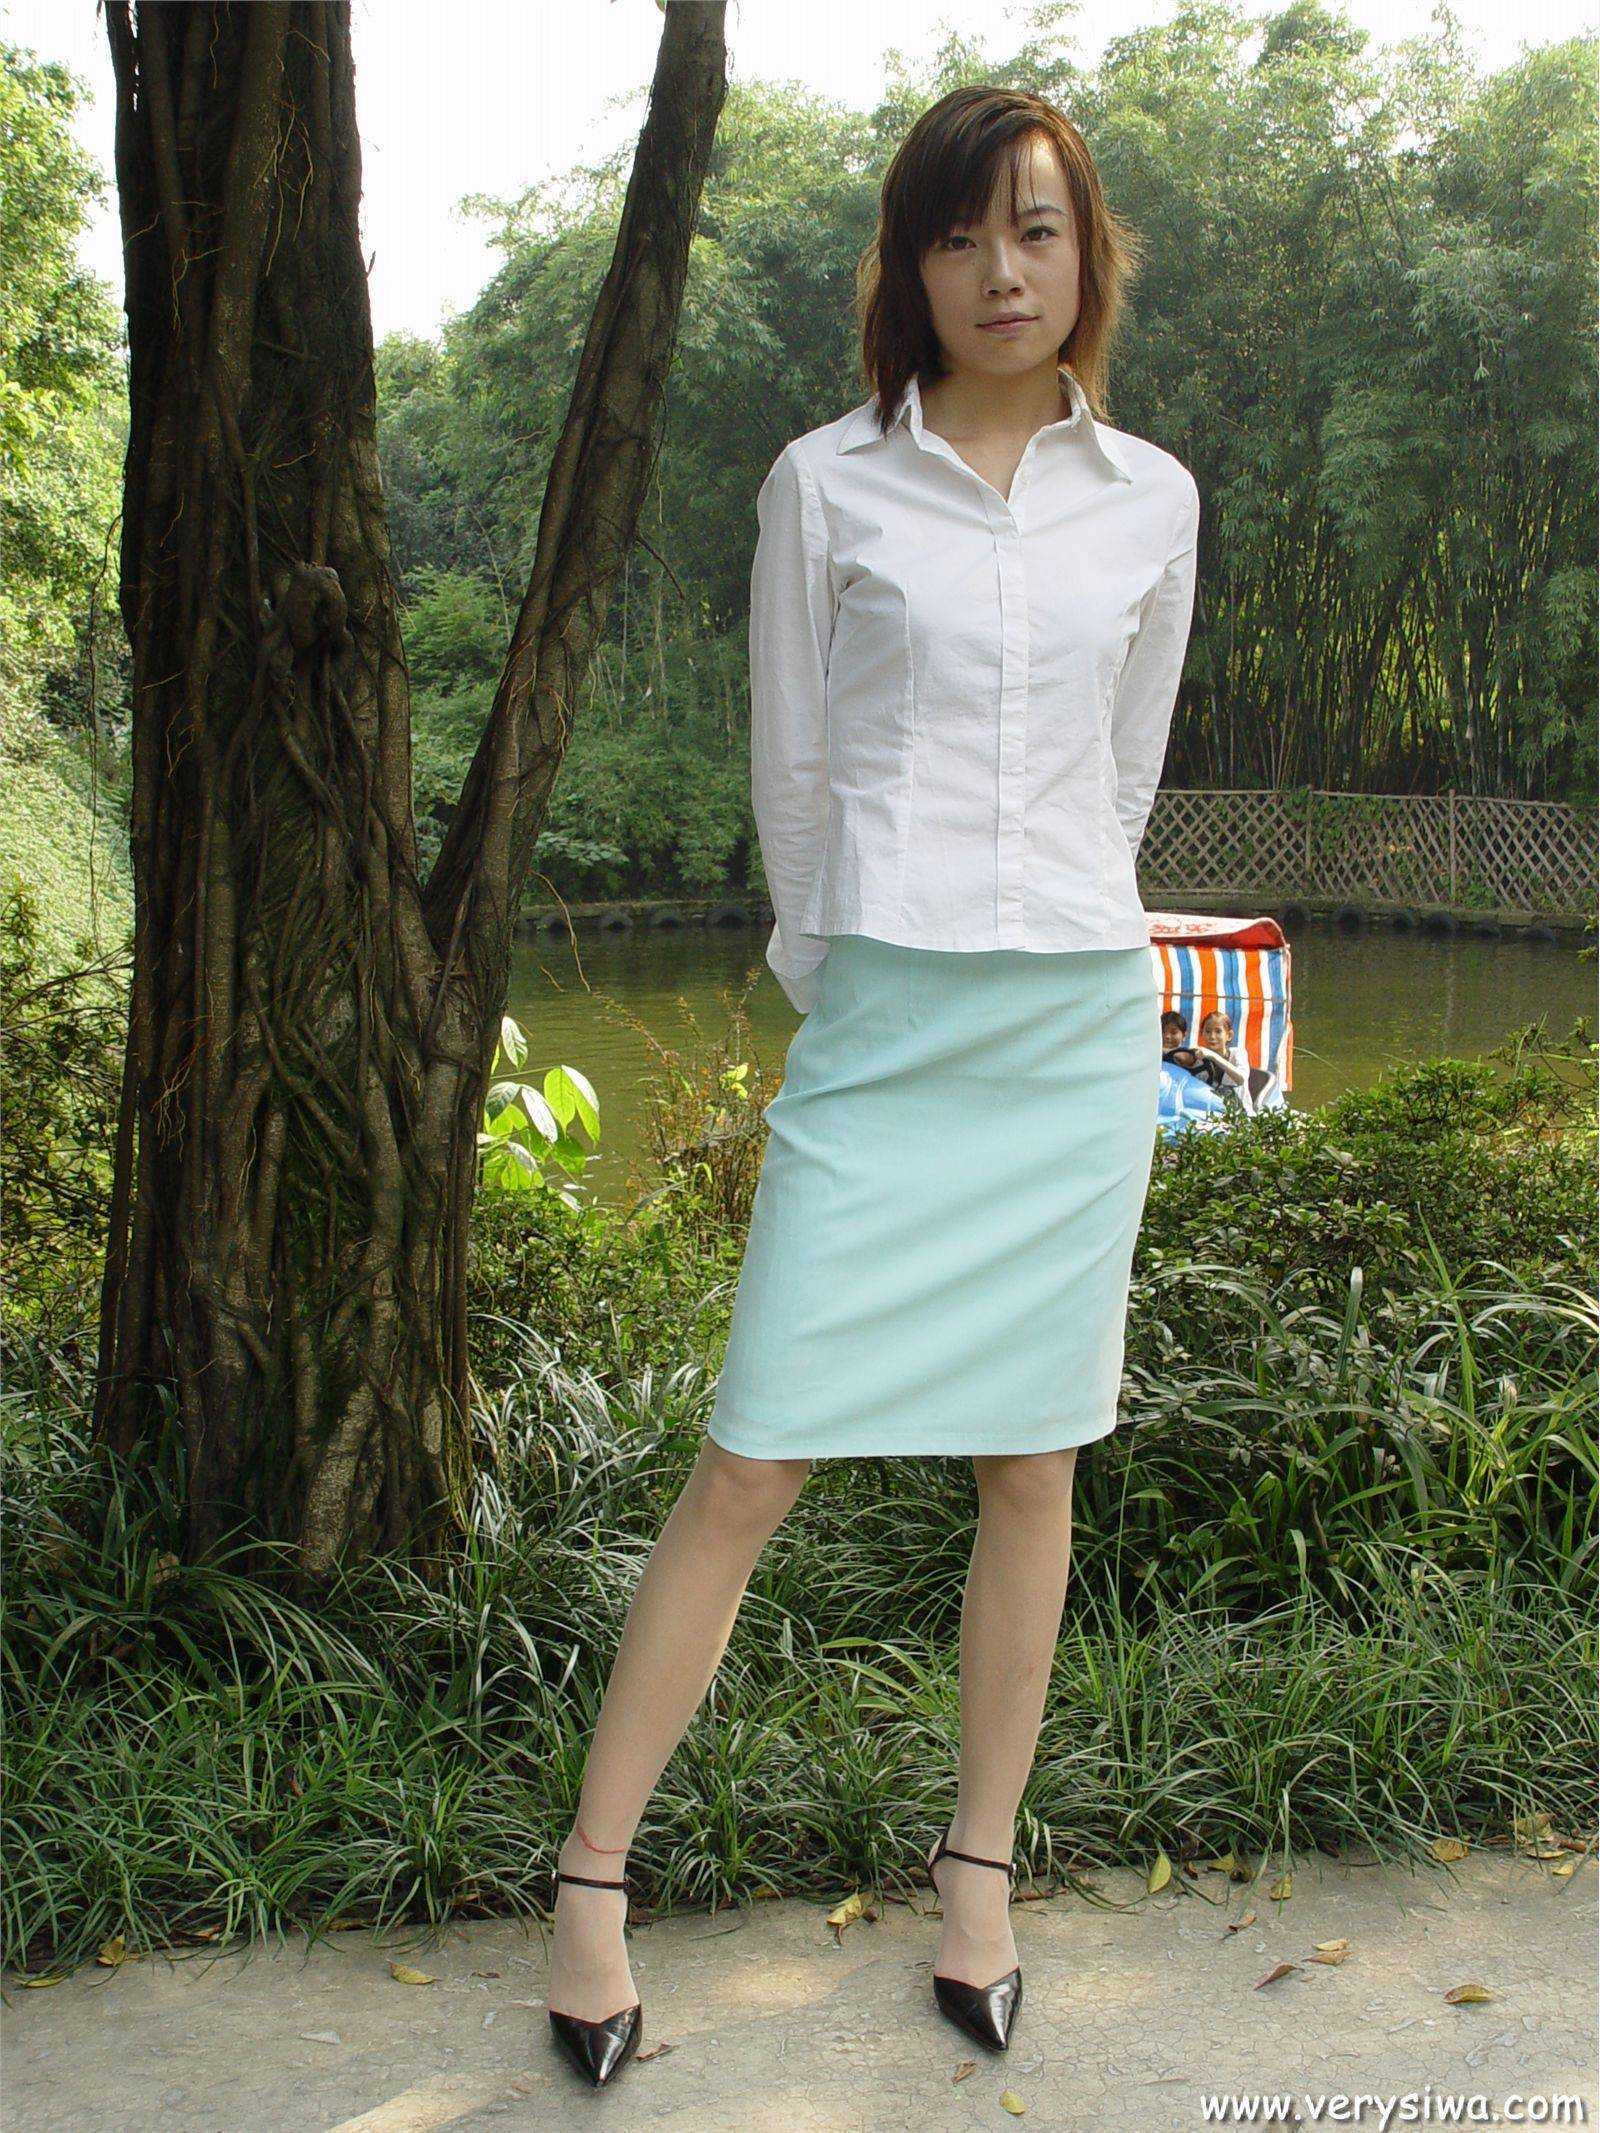 [zhonggaoyi] p003 (candy + Vivian) domestic silk stockings sexy beauty picture